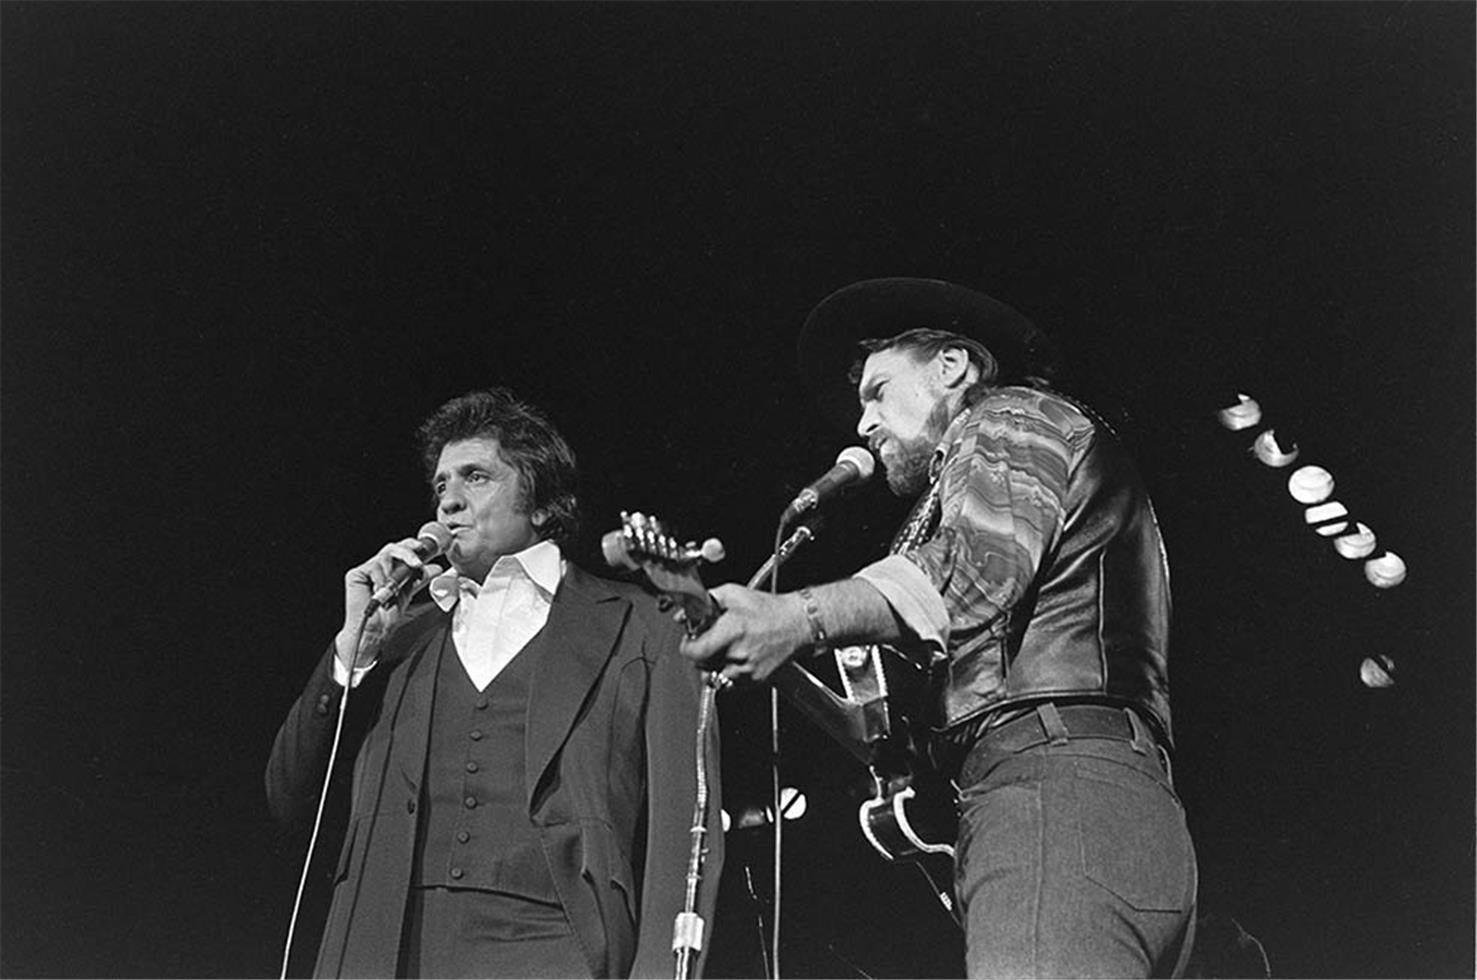  Charlyn Zlotnik Black and White Photograph - Waylon Jennings and Johnny Cash, 1978